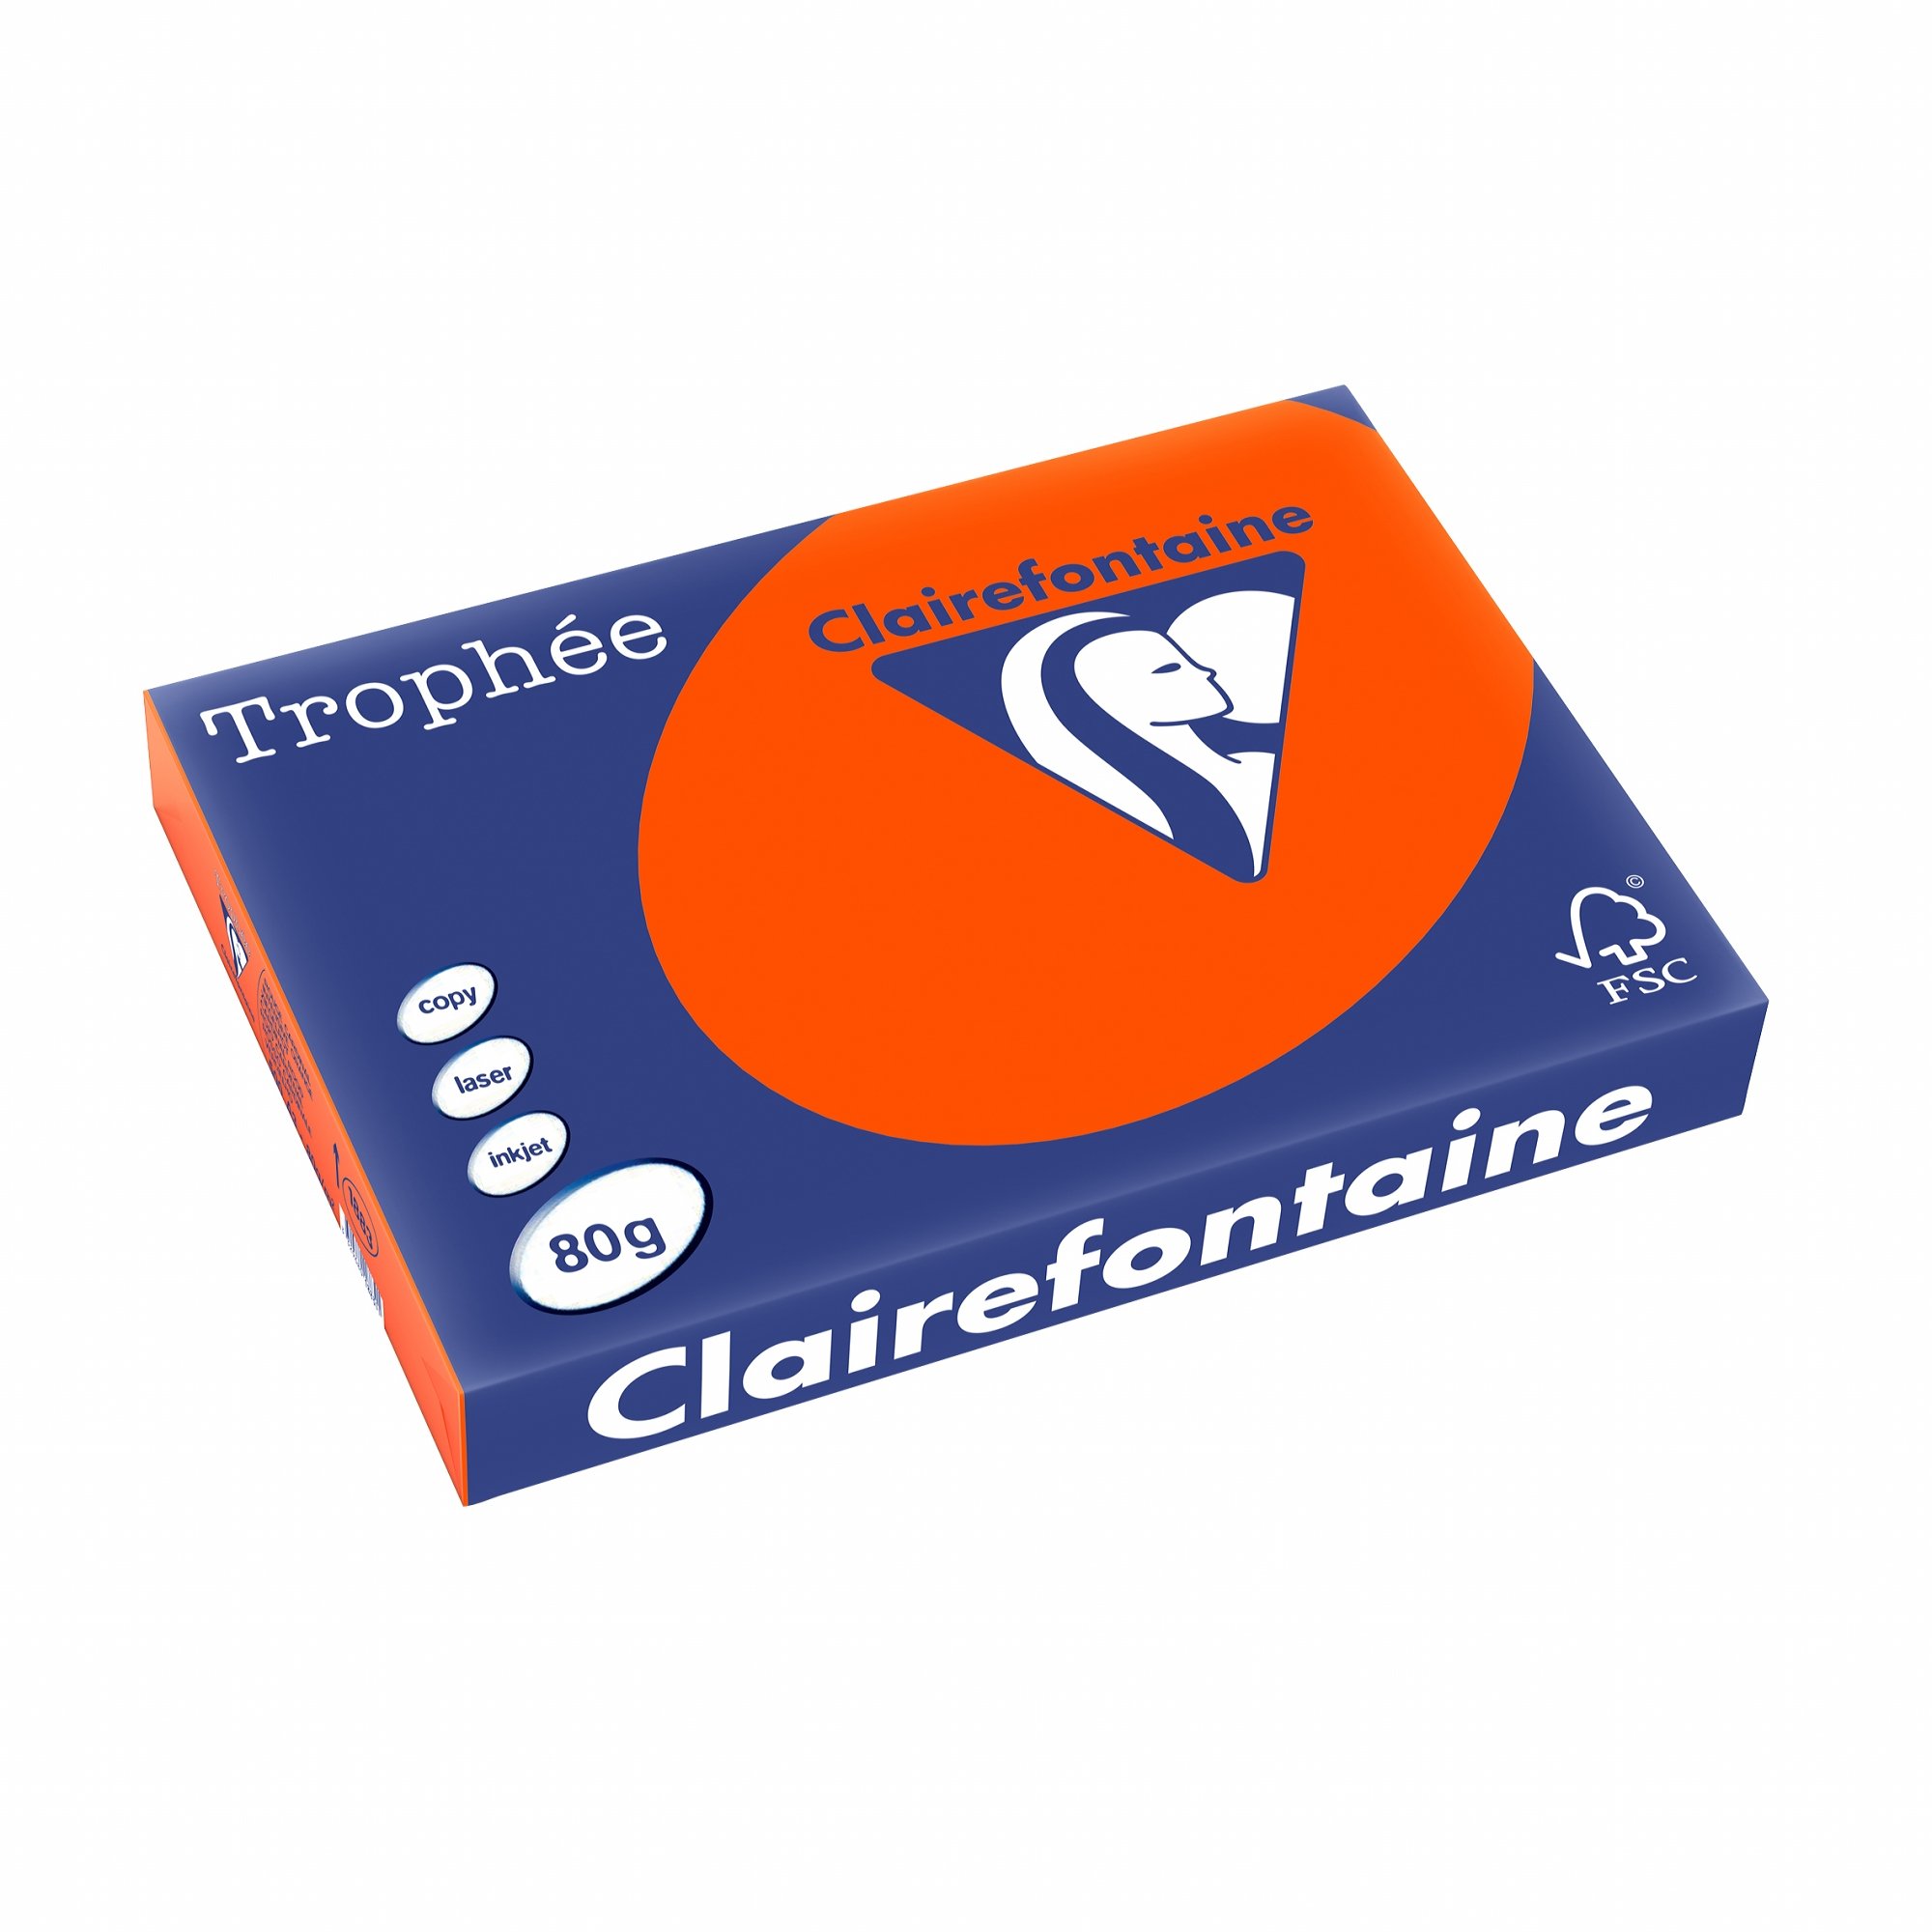 Clairefontaine 1883C - Ries Druckerpapier / Kopierpapier Trophee, intensive Farben, DIN A3, 80g, 500 Blatt, Ziegelrot, 1 Ries